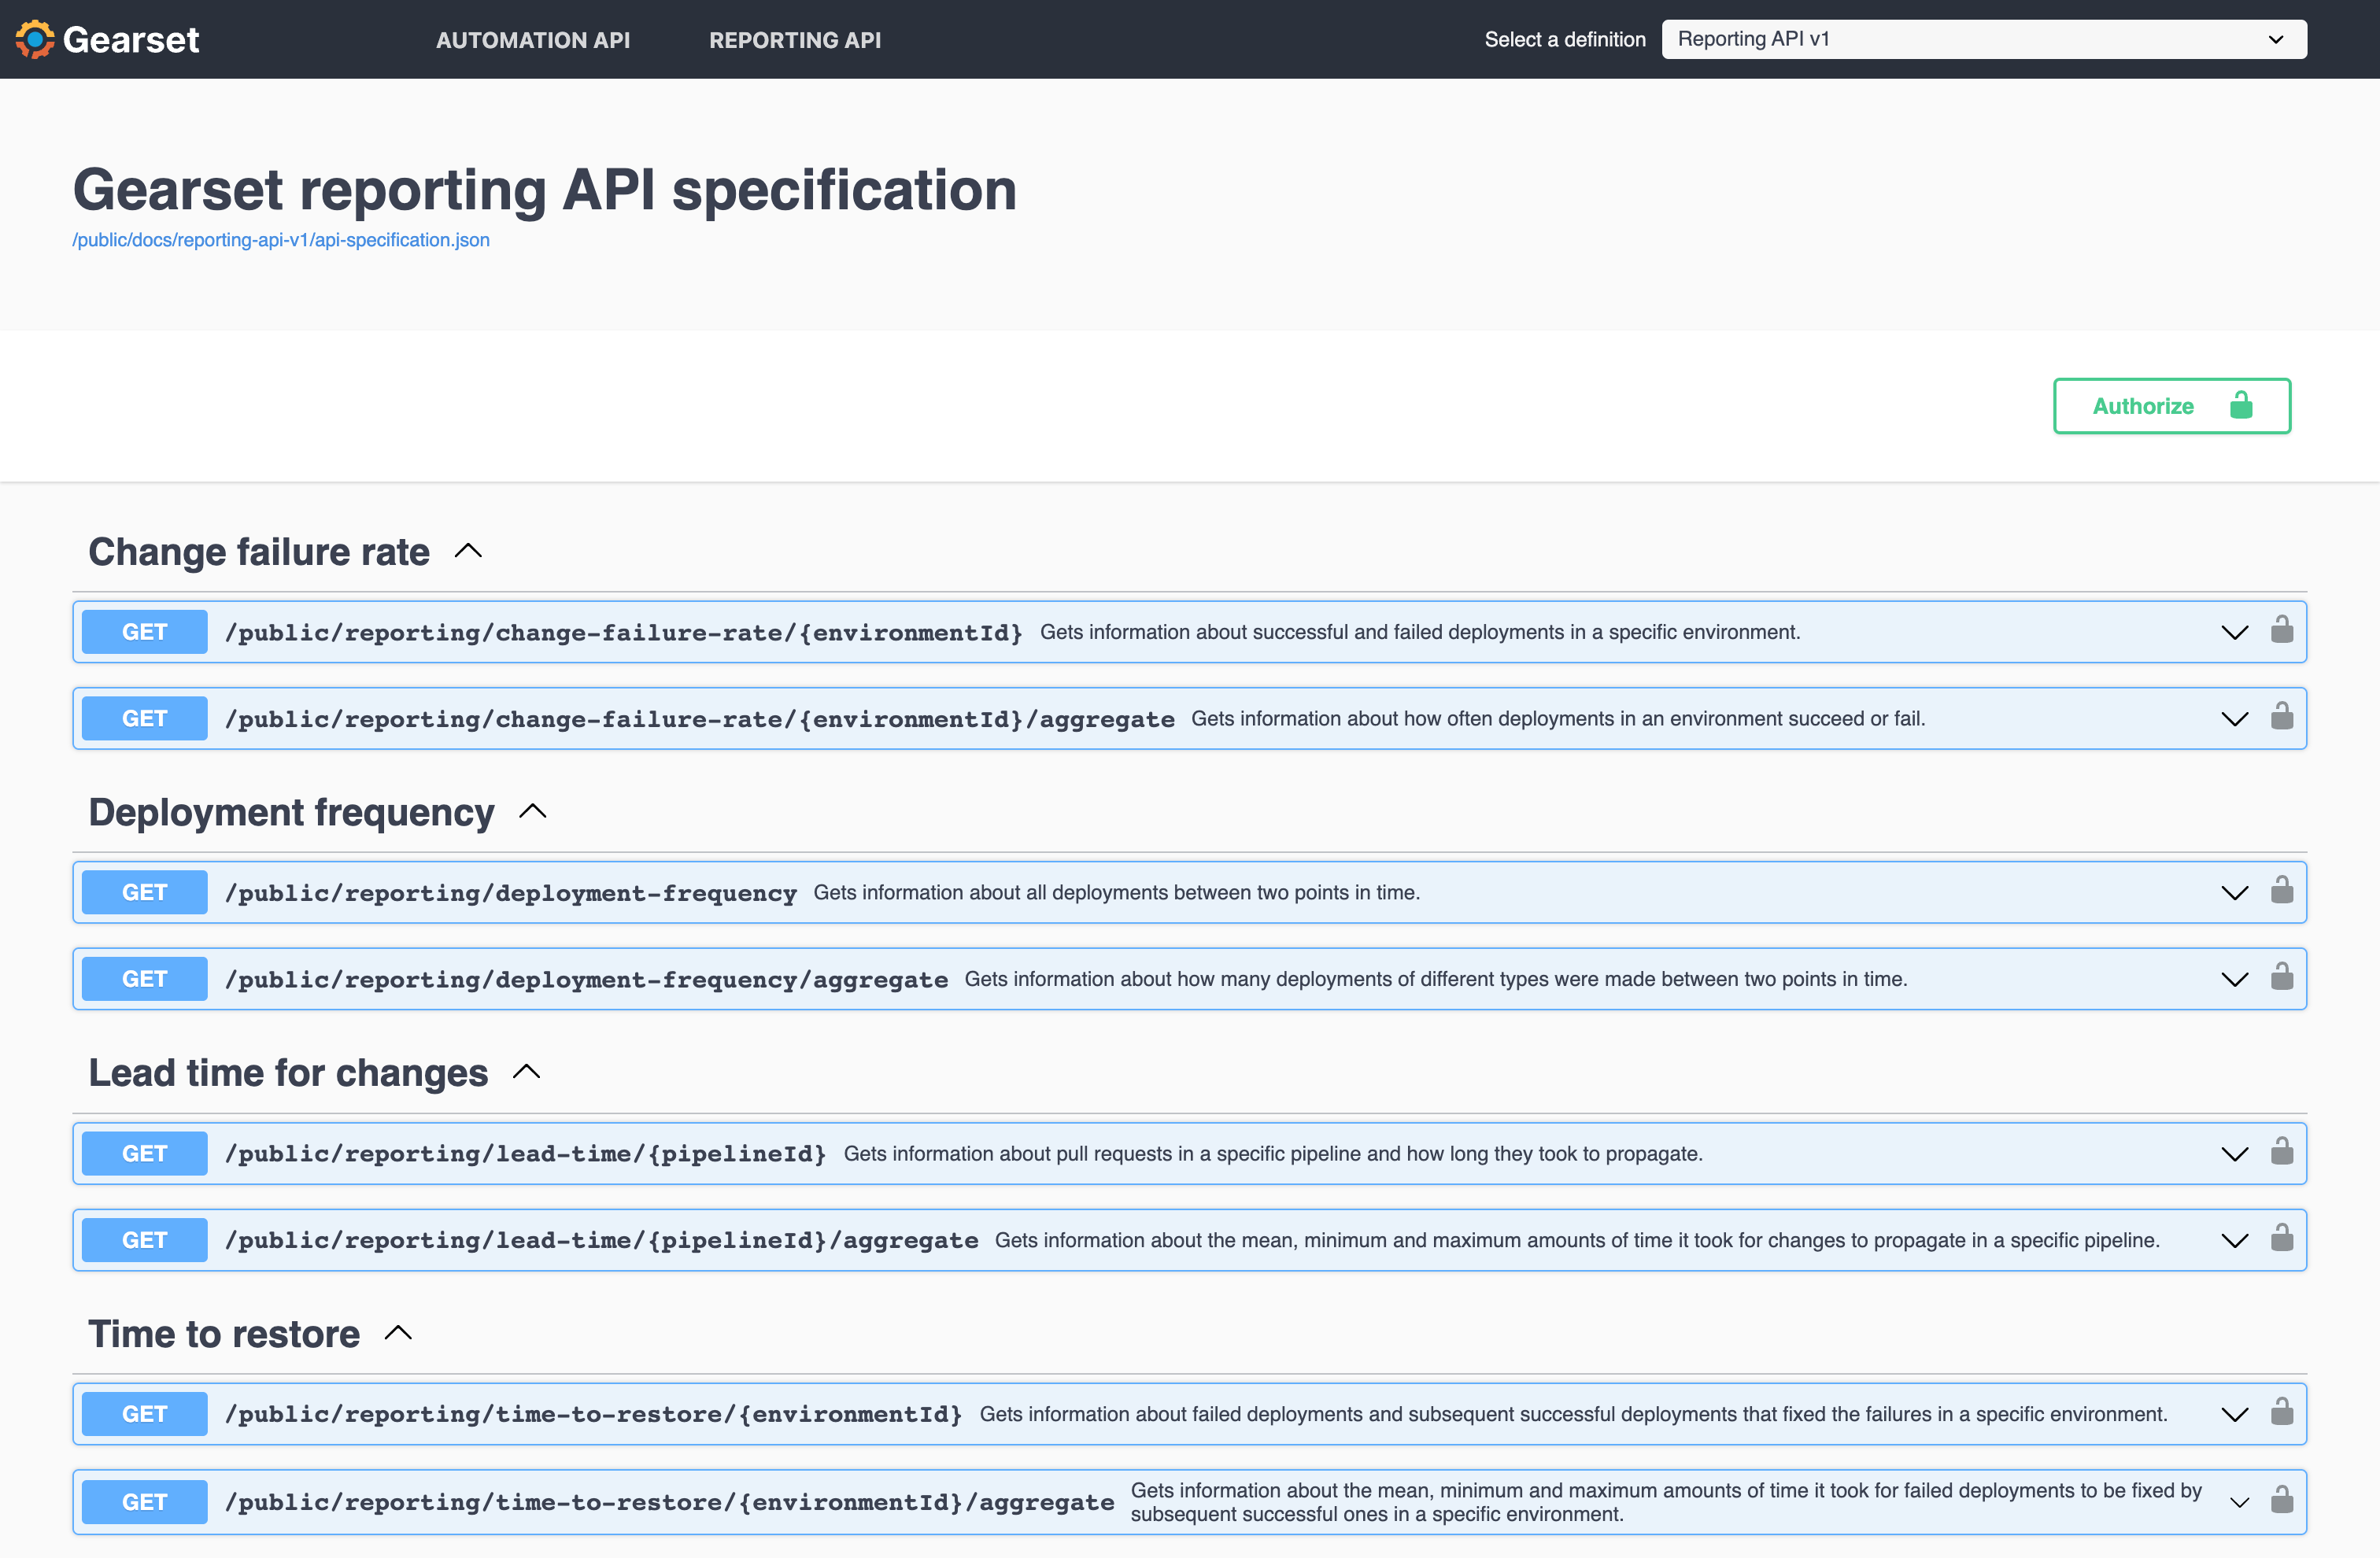 Gearset’s Reporting API